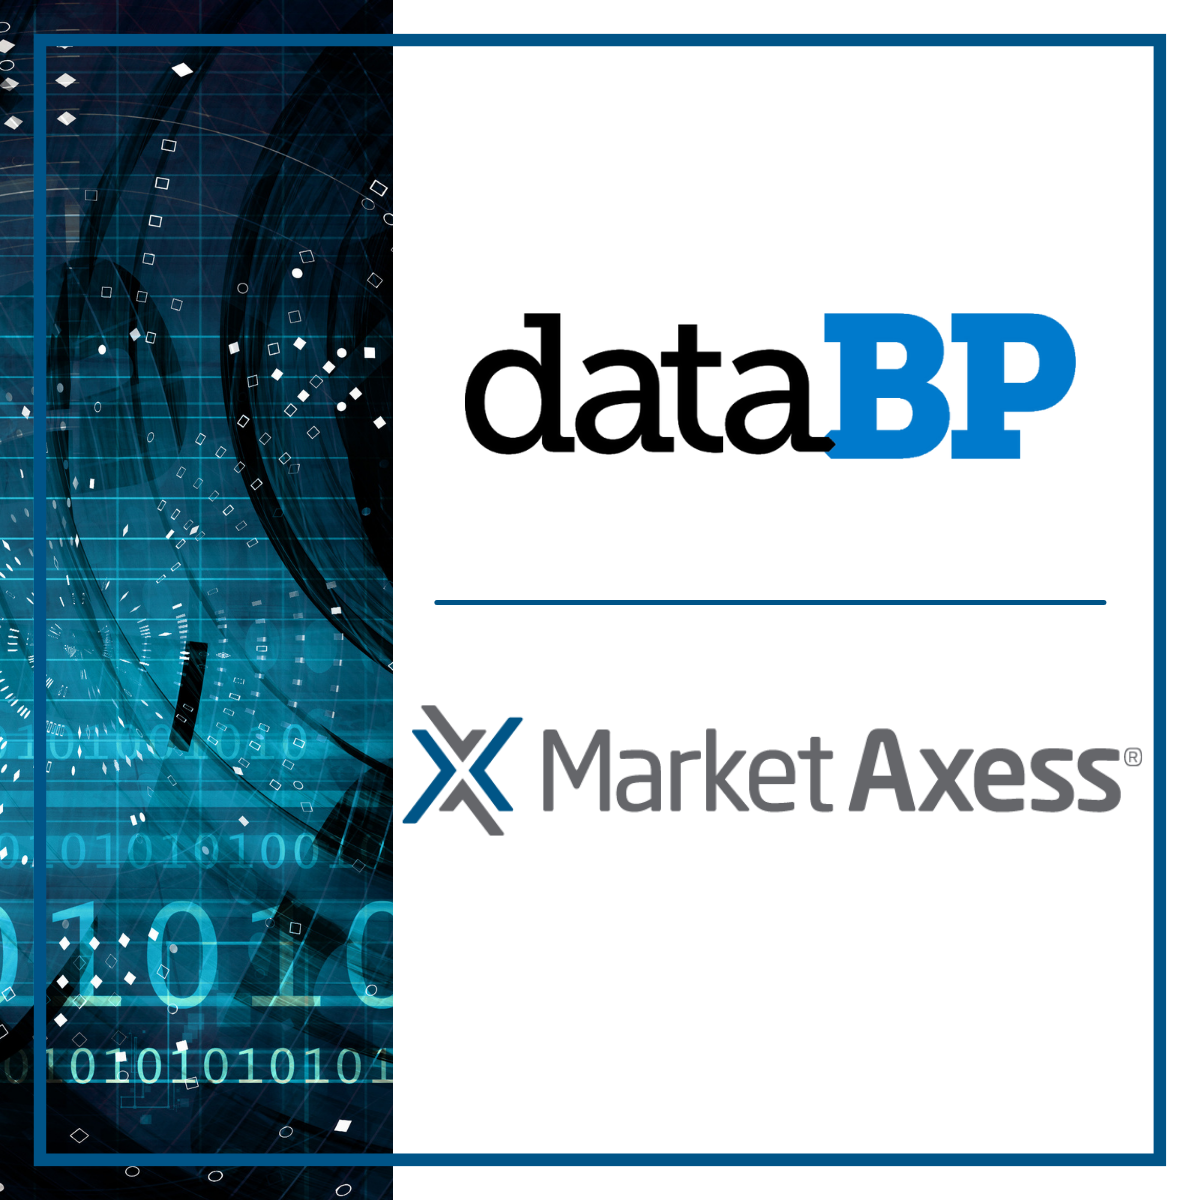 DataBP and MarketAxess